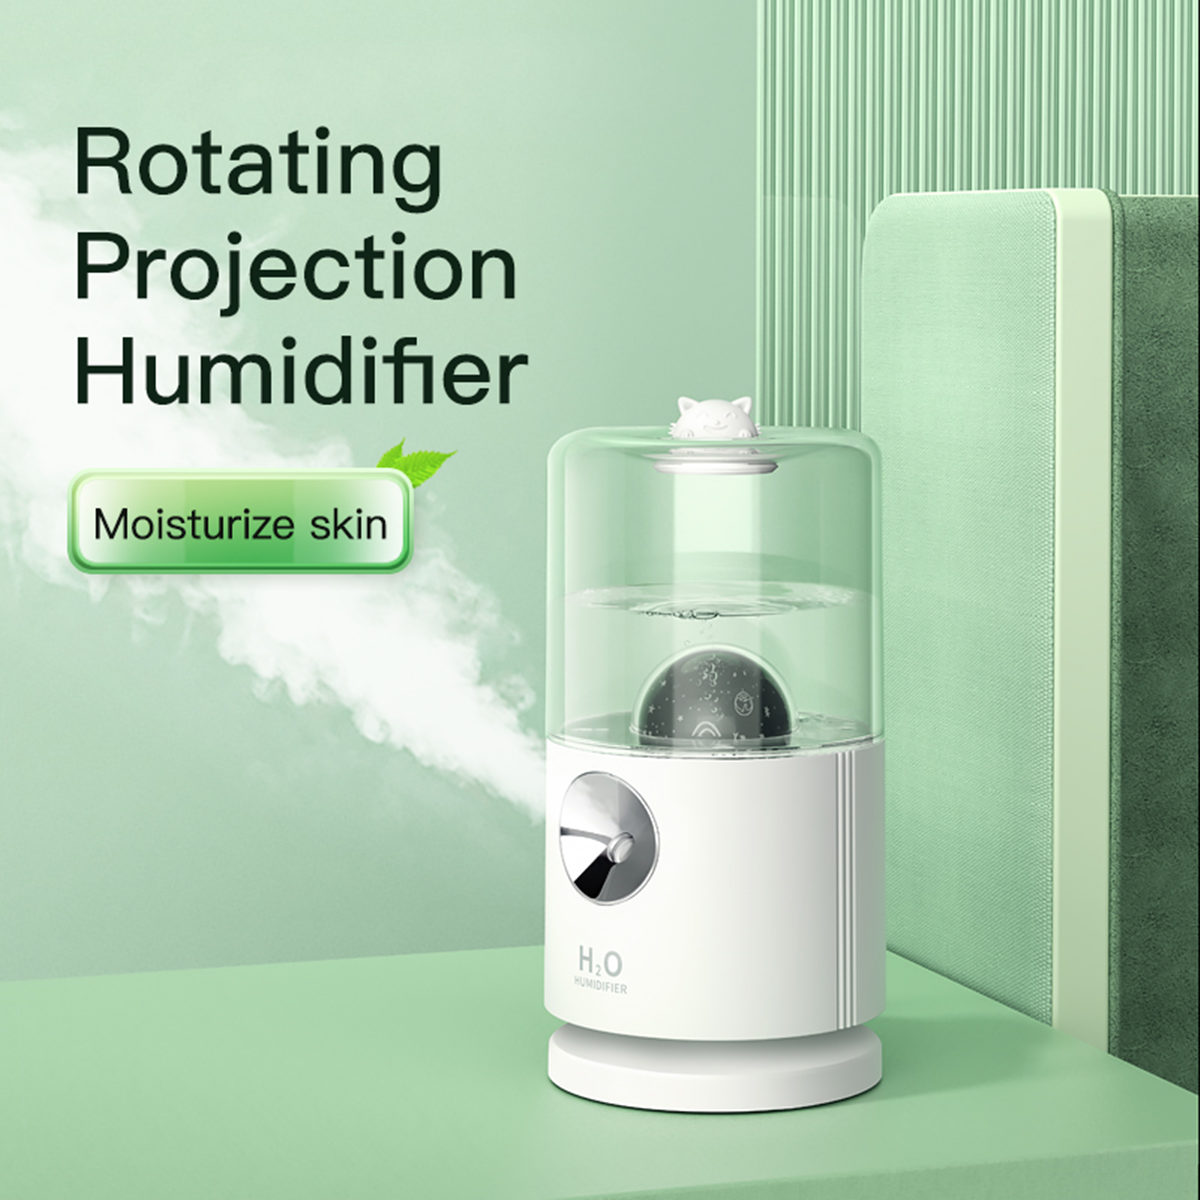 projection rotation humidifier